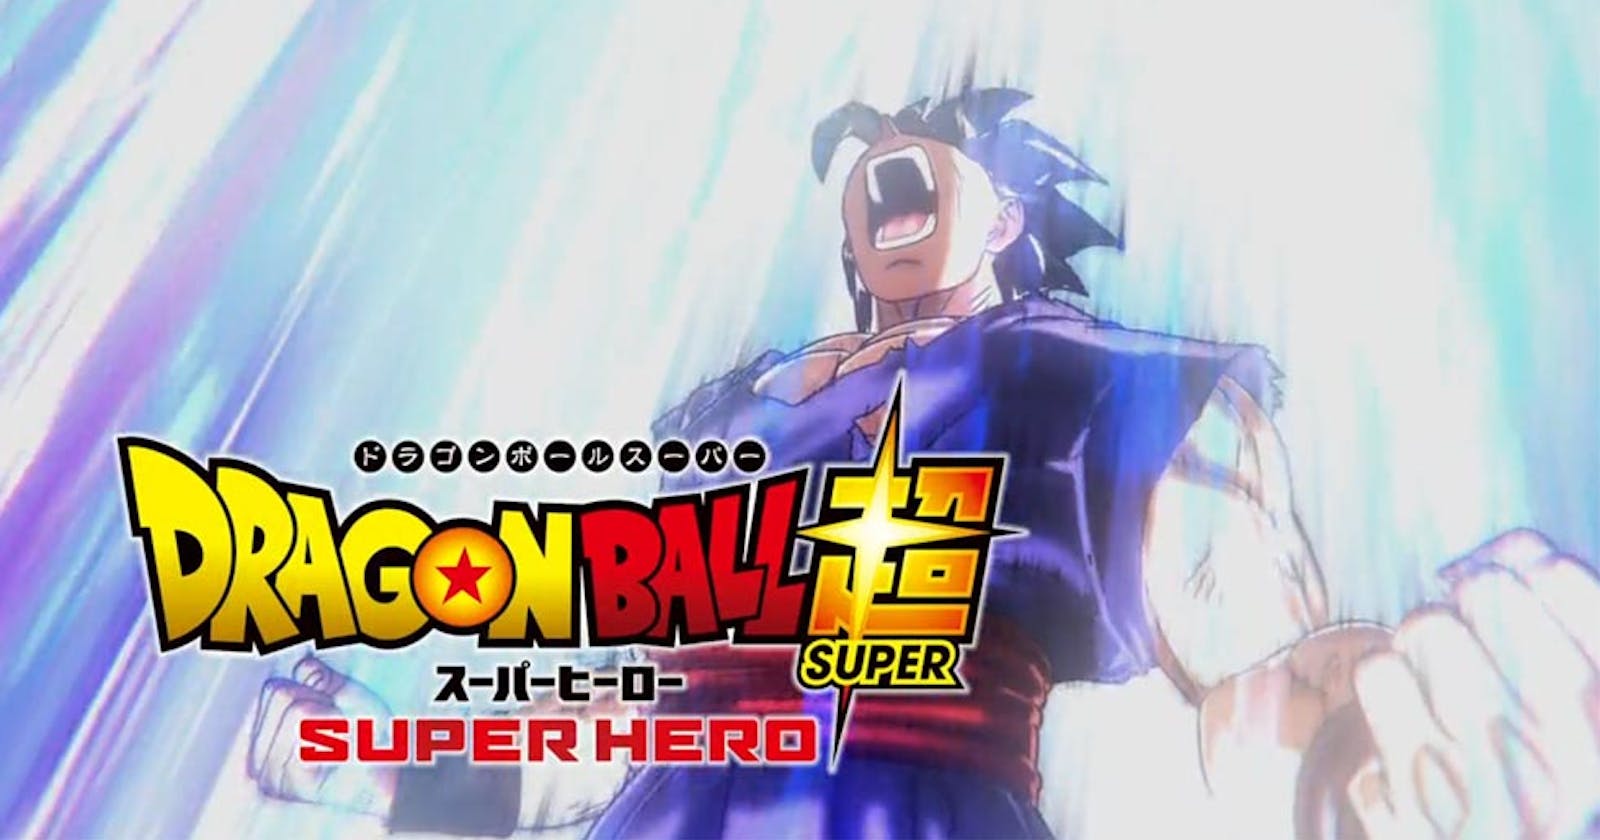 VOIR~ Dragon Ball Super: Super Hero [2022] en streaming COMPLET VF HD[france]